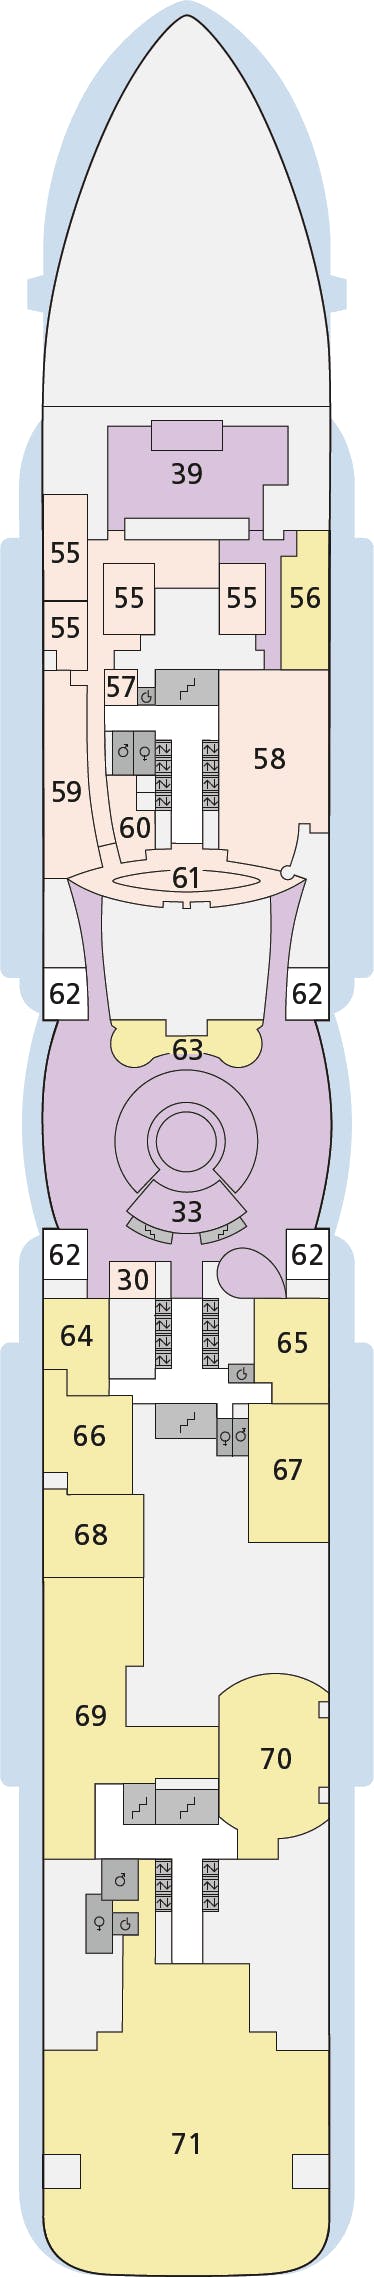 AIDAcosma - AIDA Cruises - Deck 6 (Deck 6)